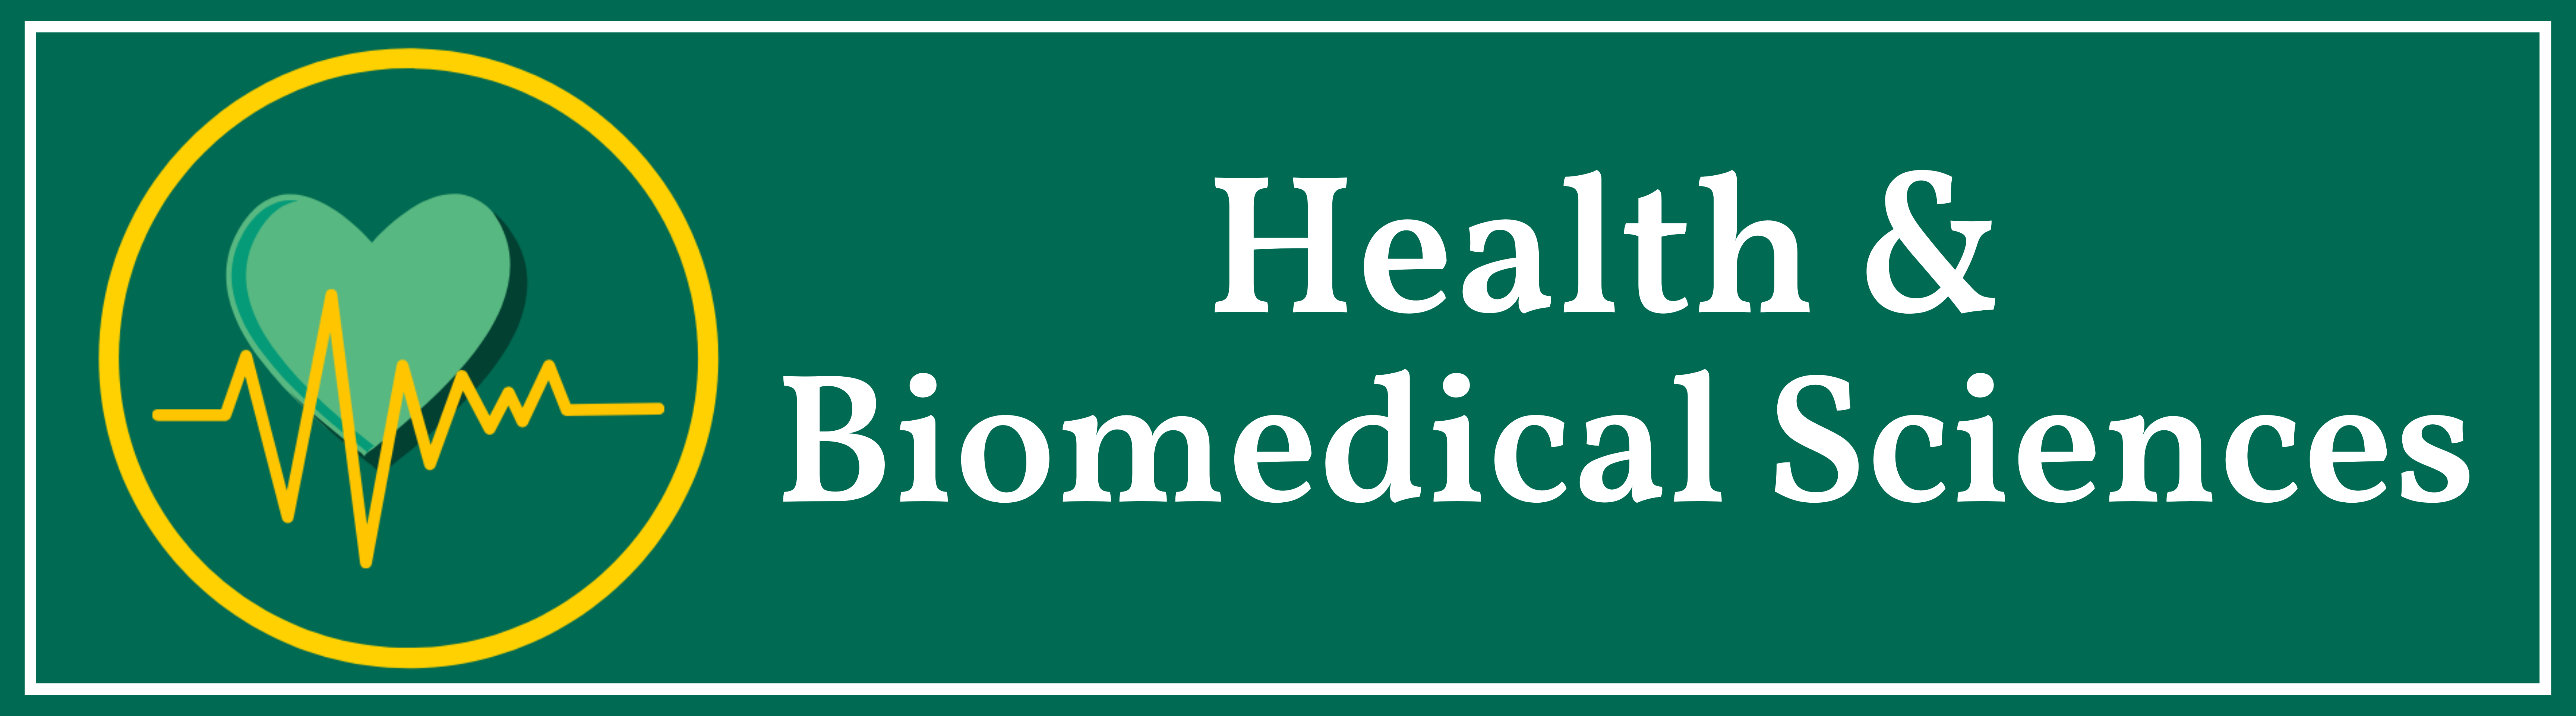 Health & Biomedical Sciences Community